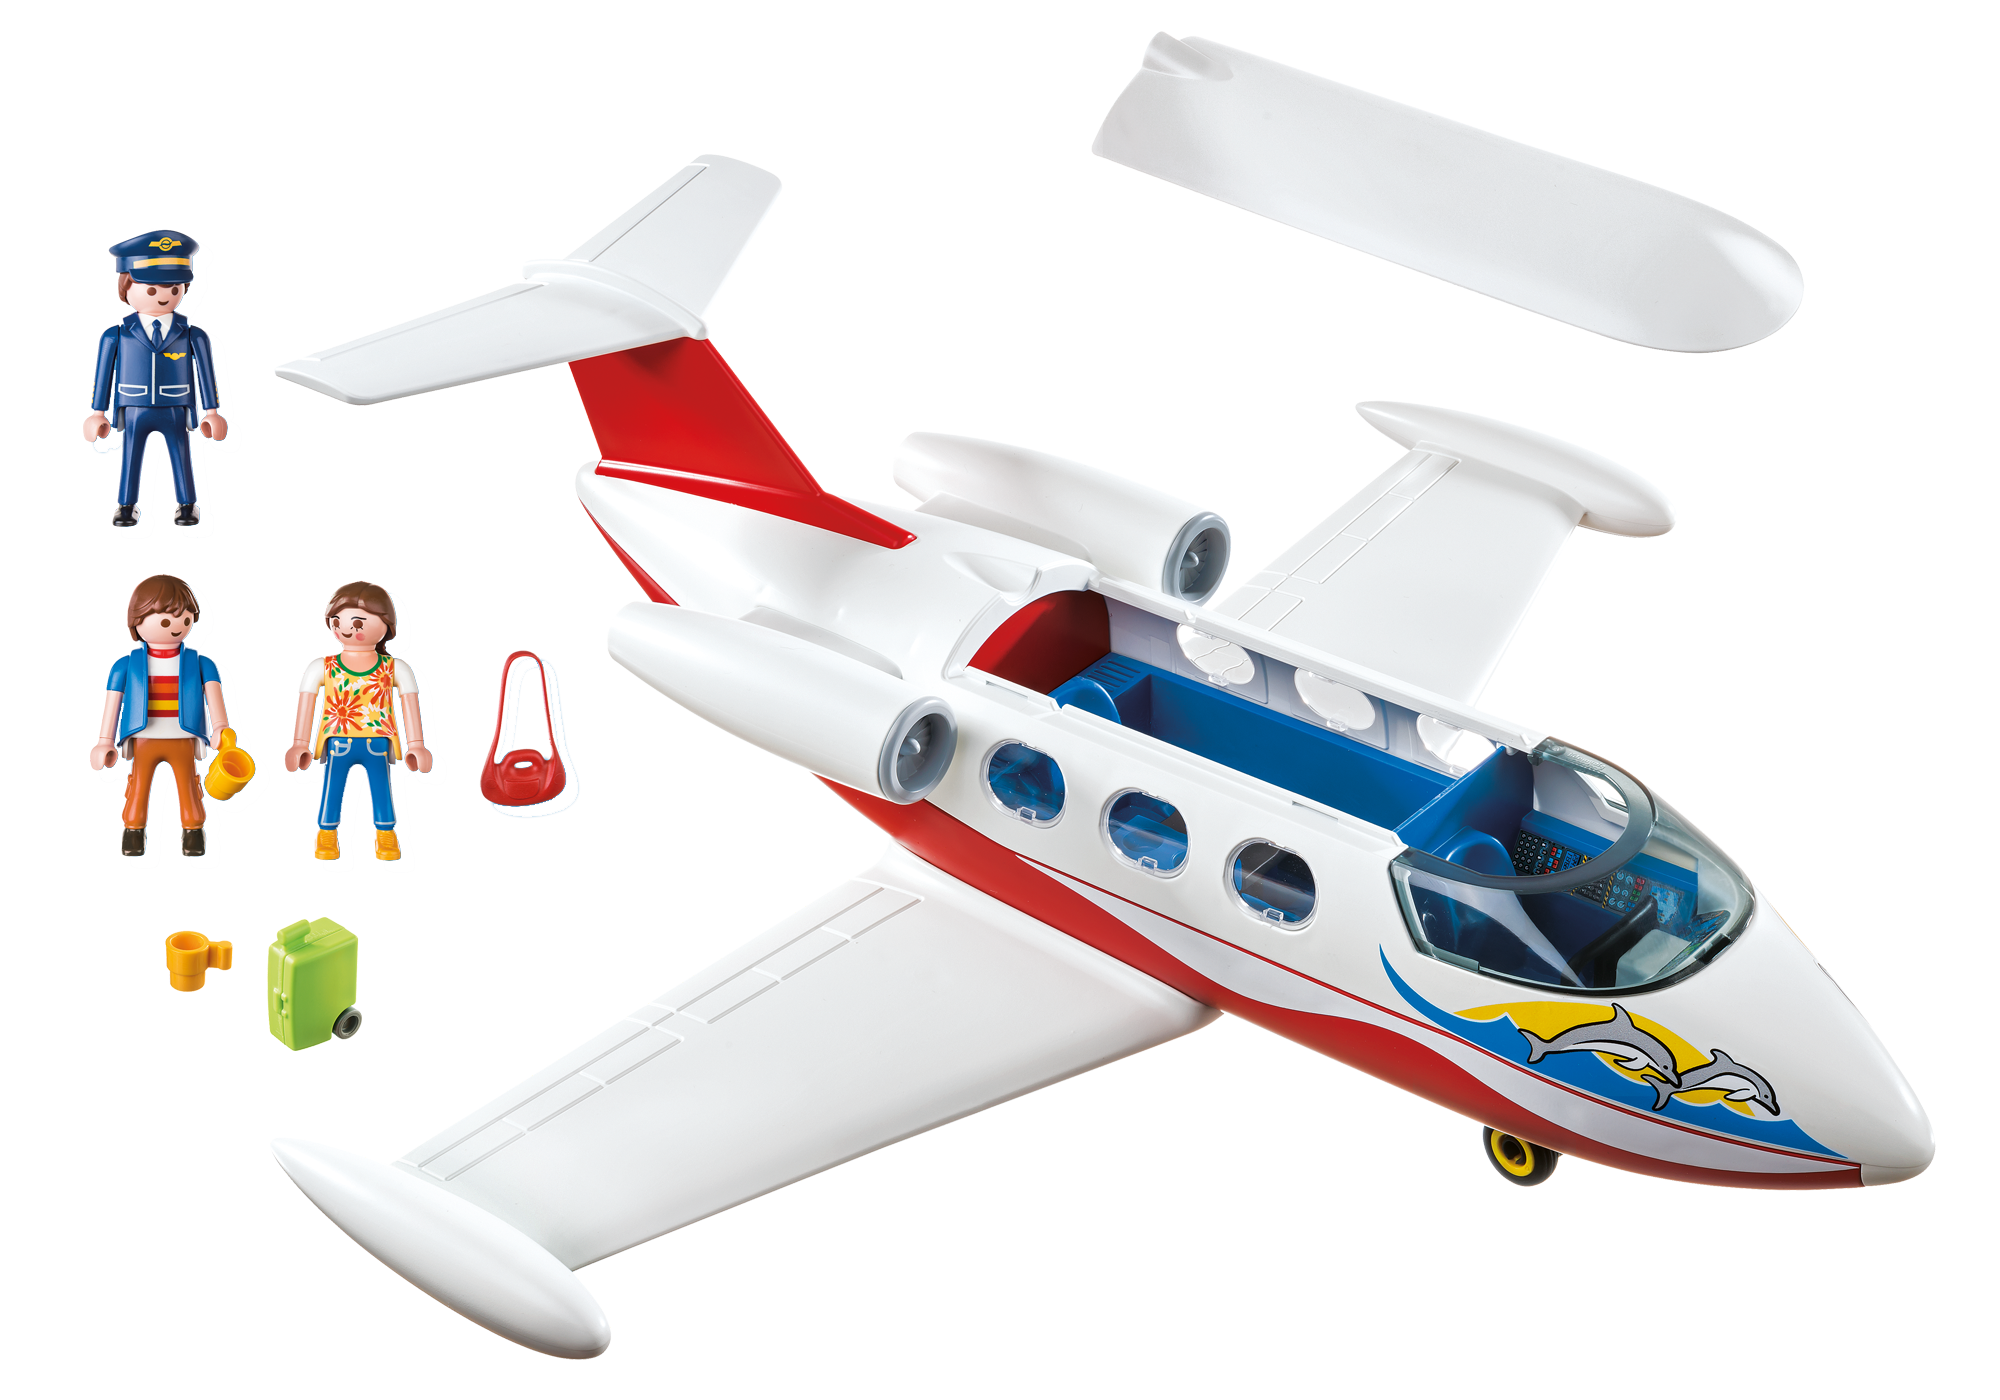 avion playmobil polystyrène